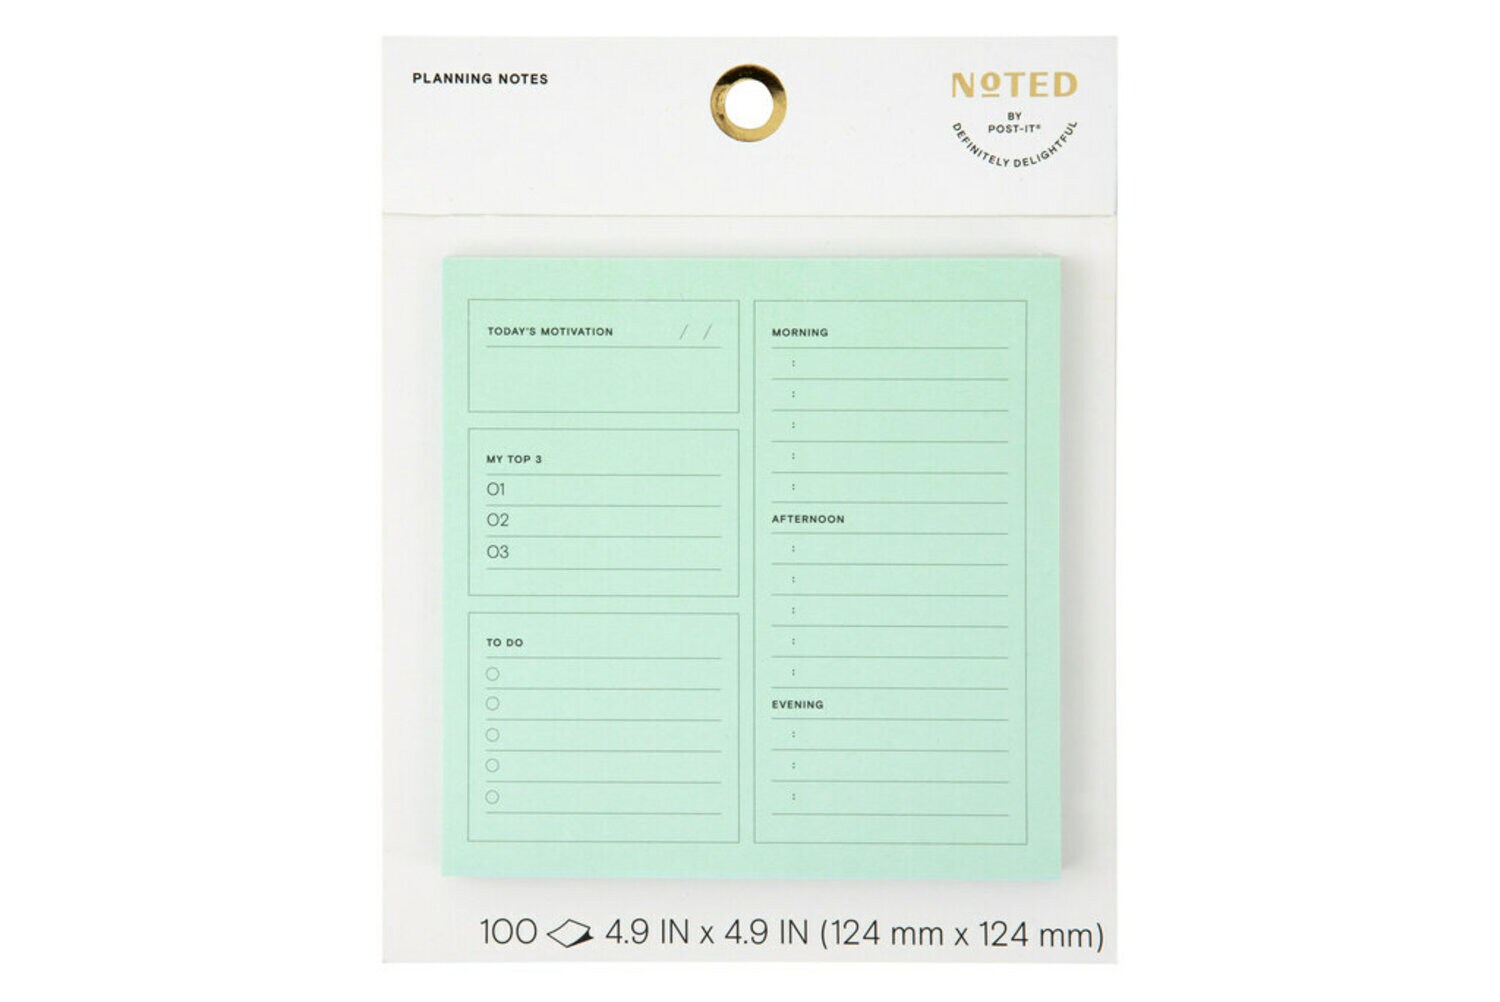 7100292510 - Post-it Planner Pad NTDW-55-1, 4.9 in x 4.9 in (124 mm x 124 mm)